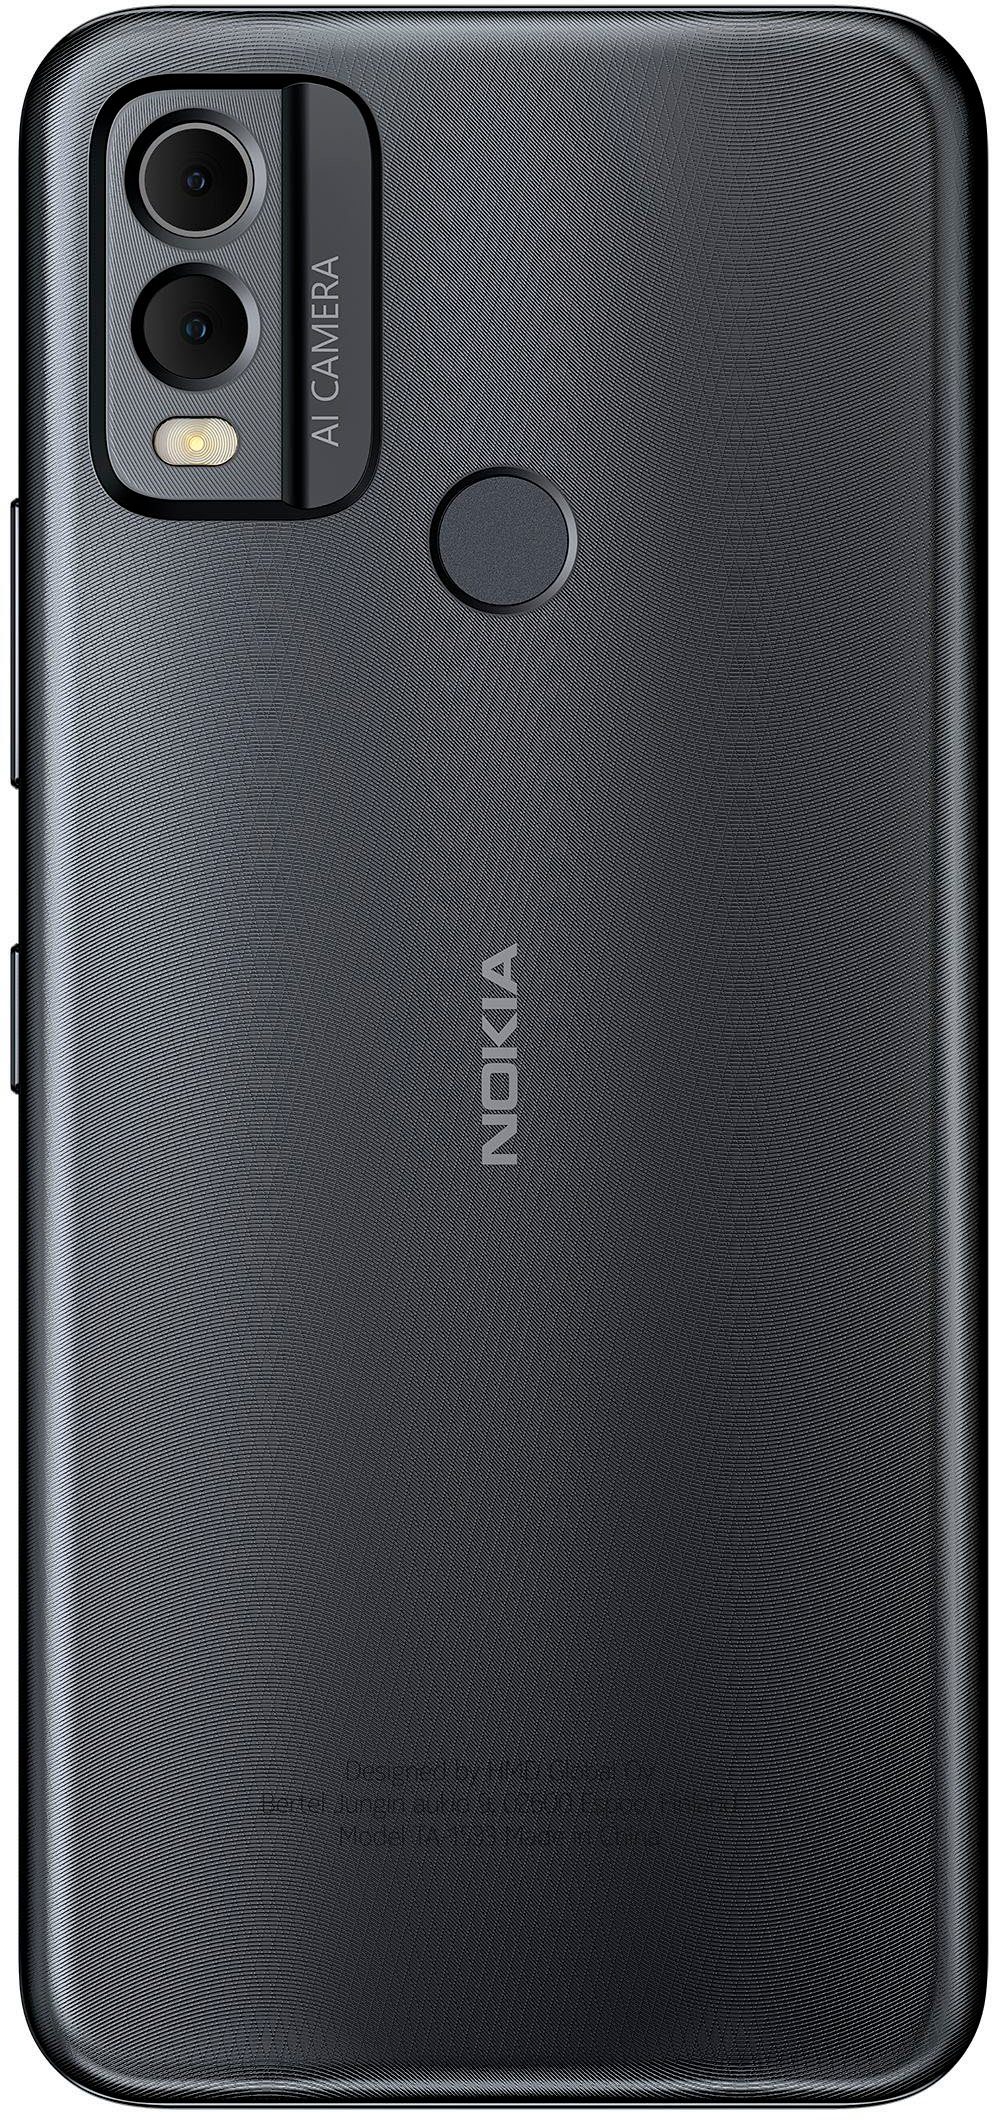 64 Kamera) 2+64GB MP Nokia cm/6,52 Black Smartphone (16,56 Speicherplatz, C22, 13 Midnight GB Zoll,